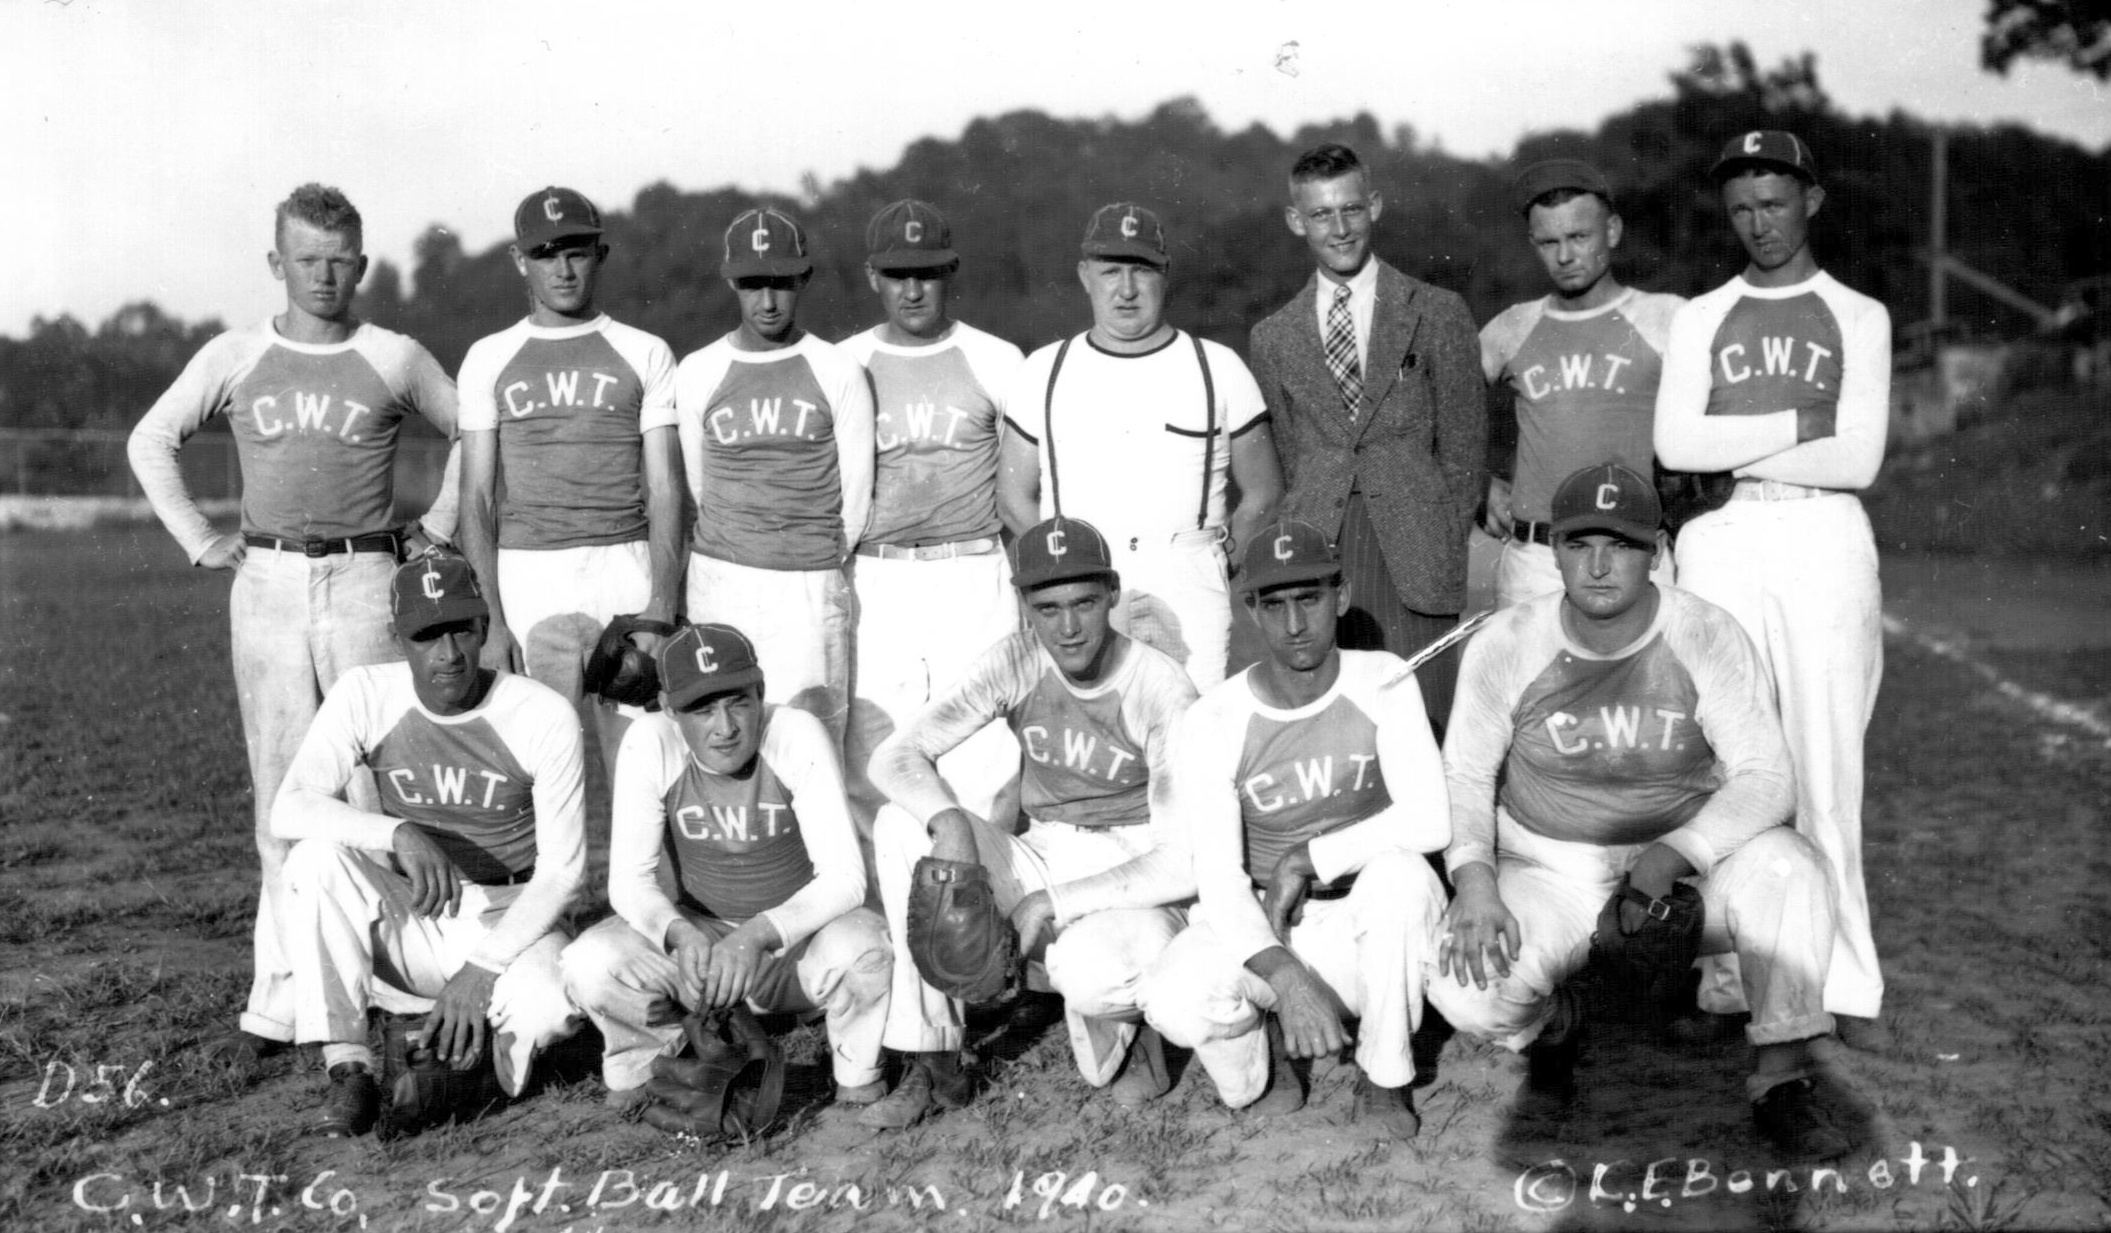 Carolina Wood Turning softball team, 1940